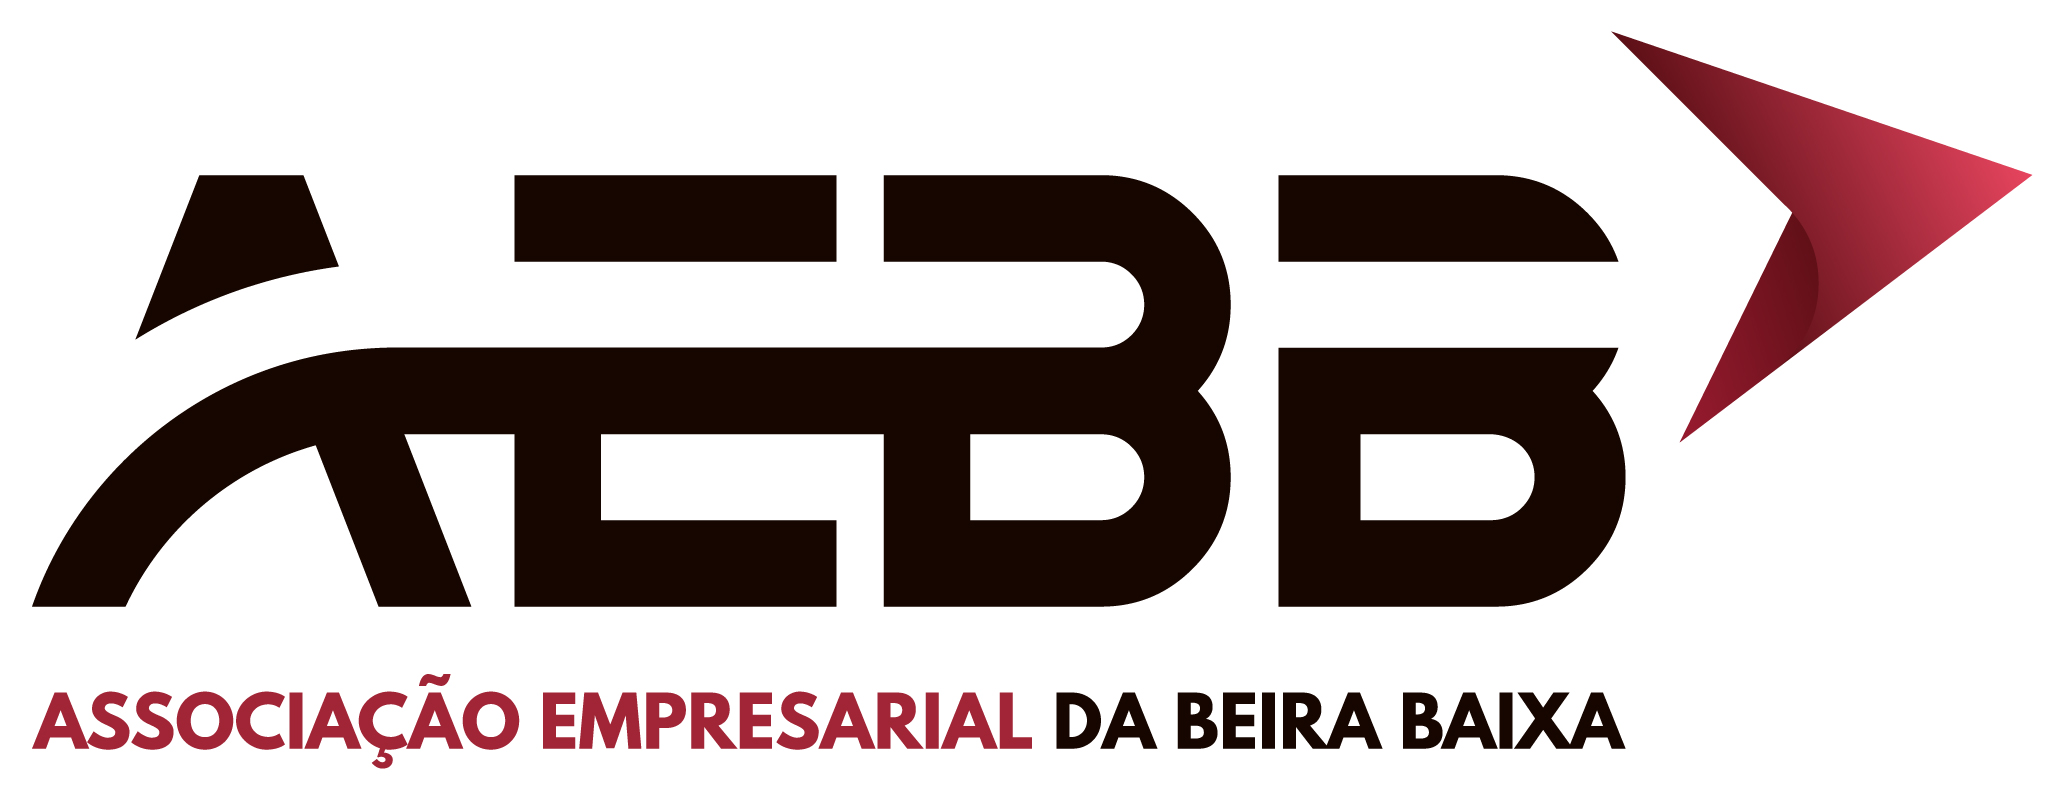 Logo AEBB Vp Cor JPG